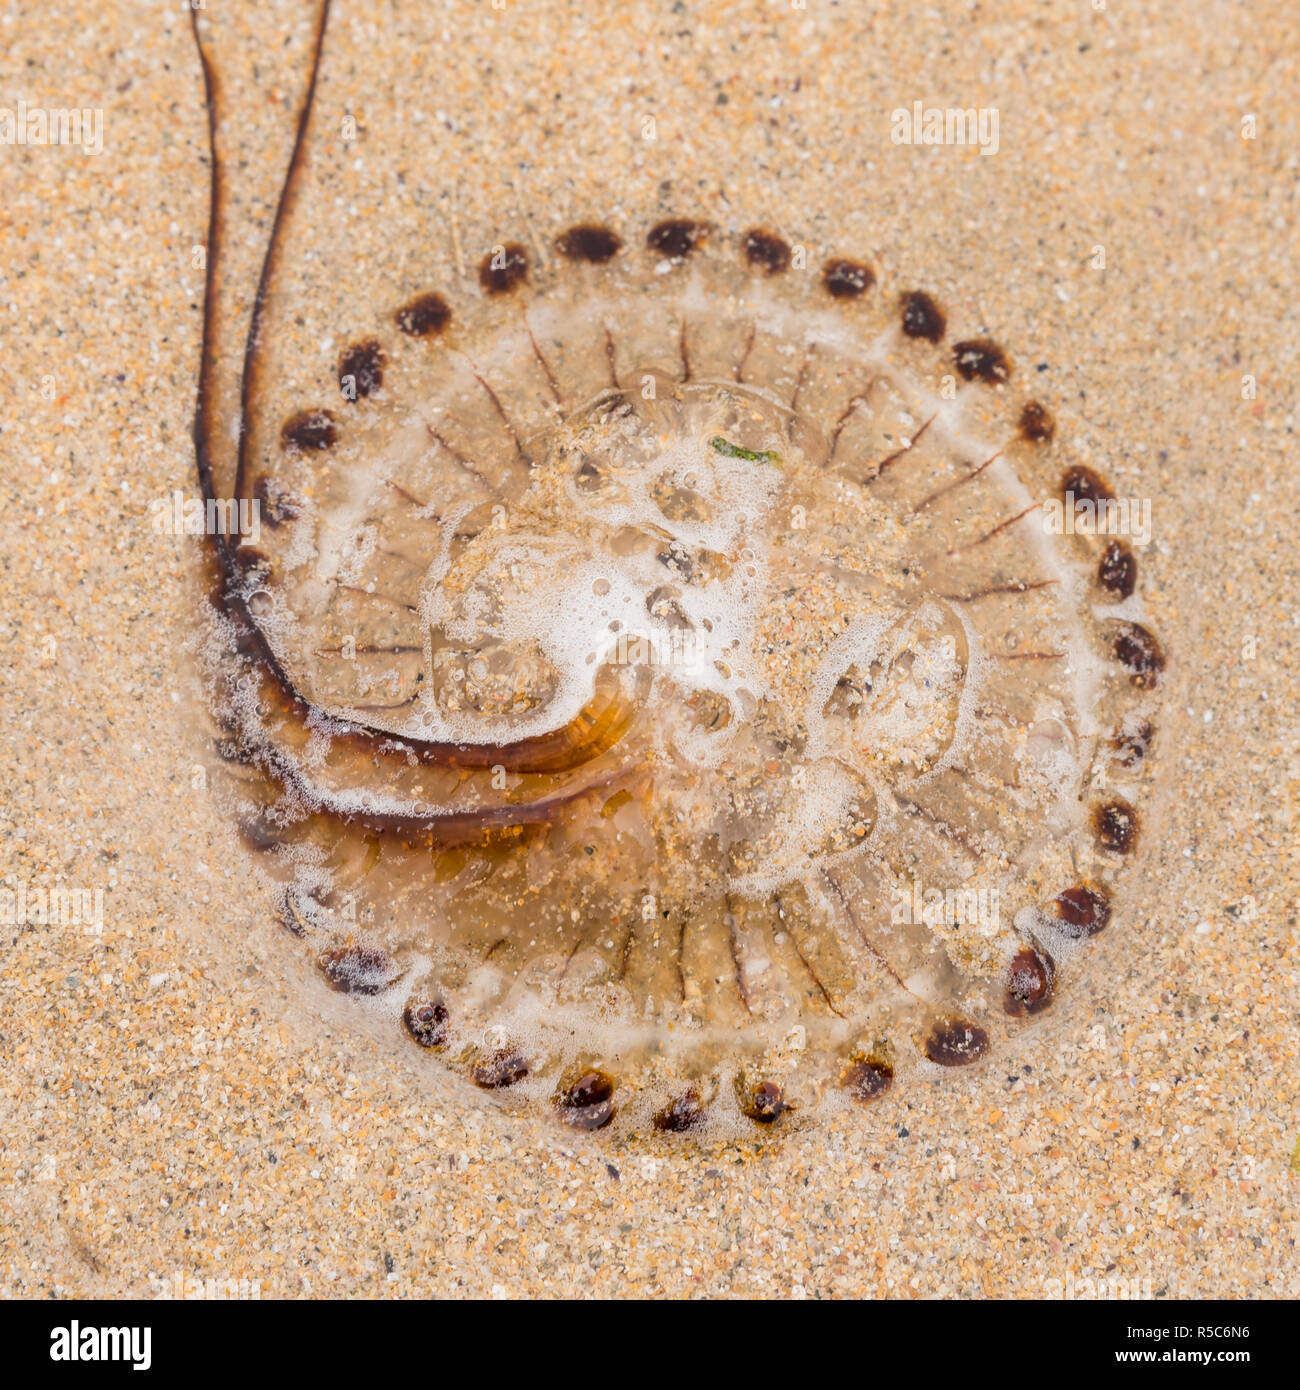 A striped Compass jellyfish (Chrysaora hysoscella) stranded on a sandy beach in Cornwall UK - underside view Stock Photo